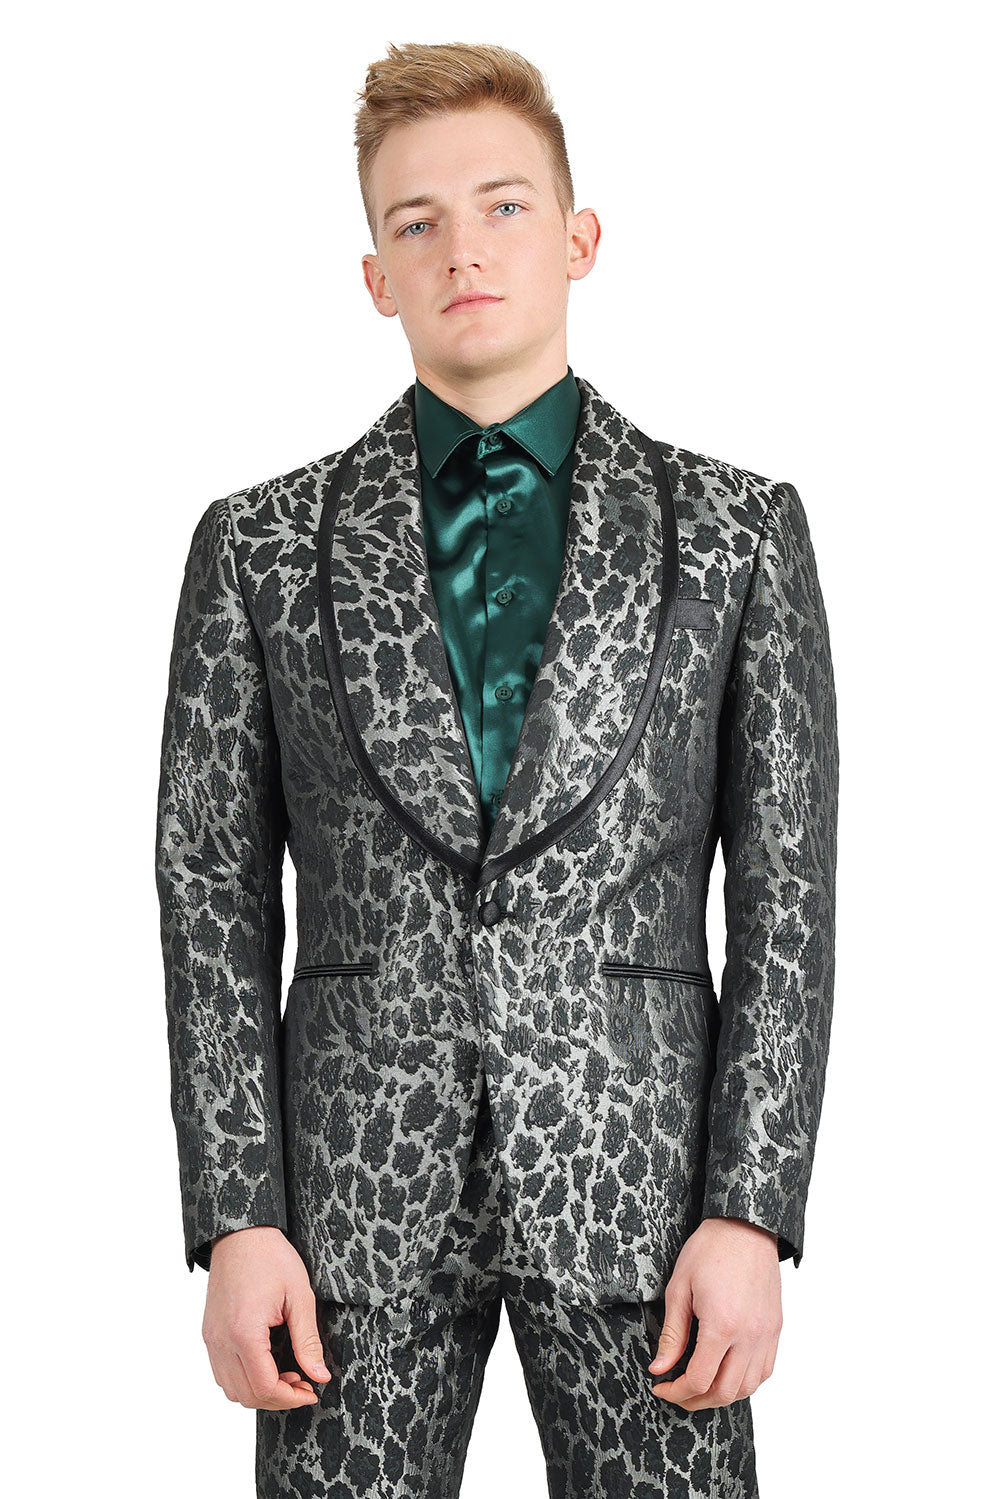 BARABAS Men's Metallic Leopard Animal Printed Shawl Lapel Blazer 3BL01 Black